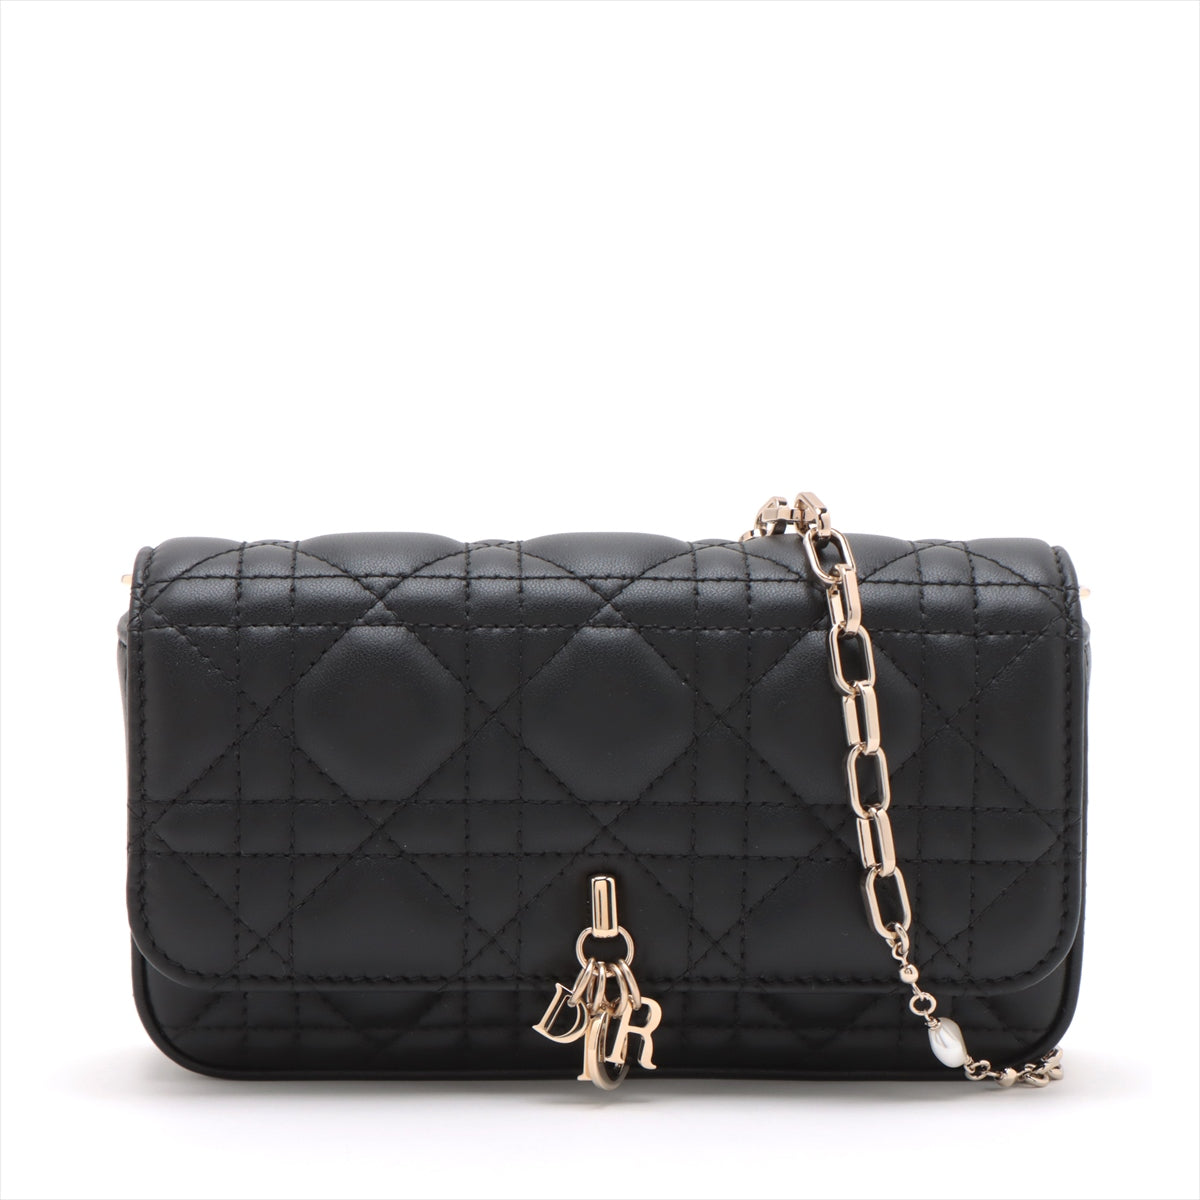 Christian Dior Lady Dior Cannage Leather Chain Shoulder Bag Black